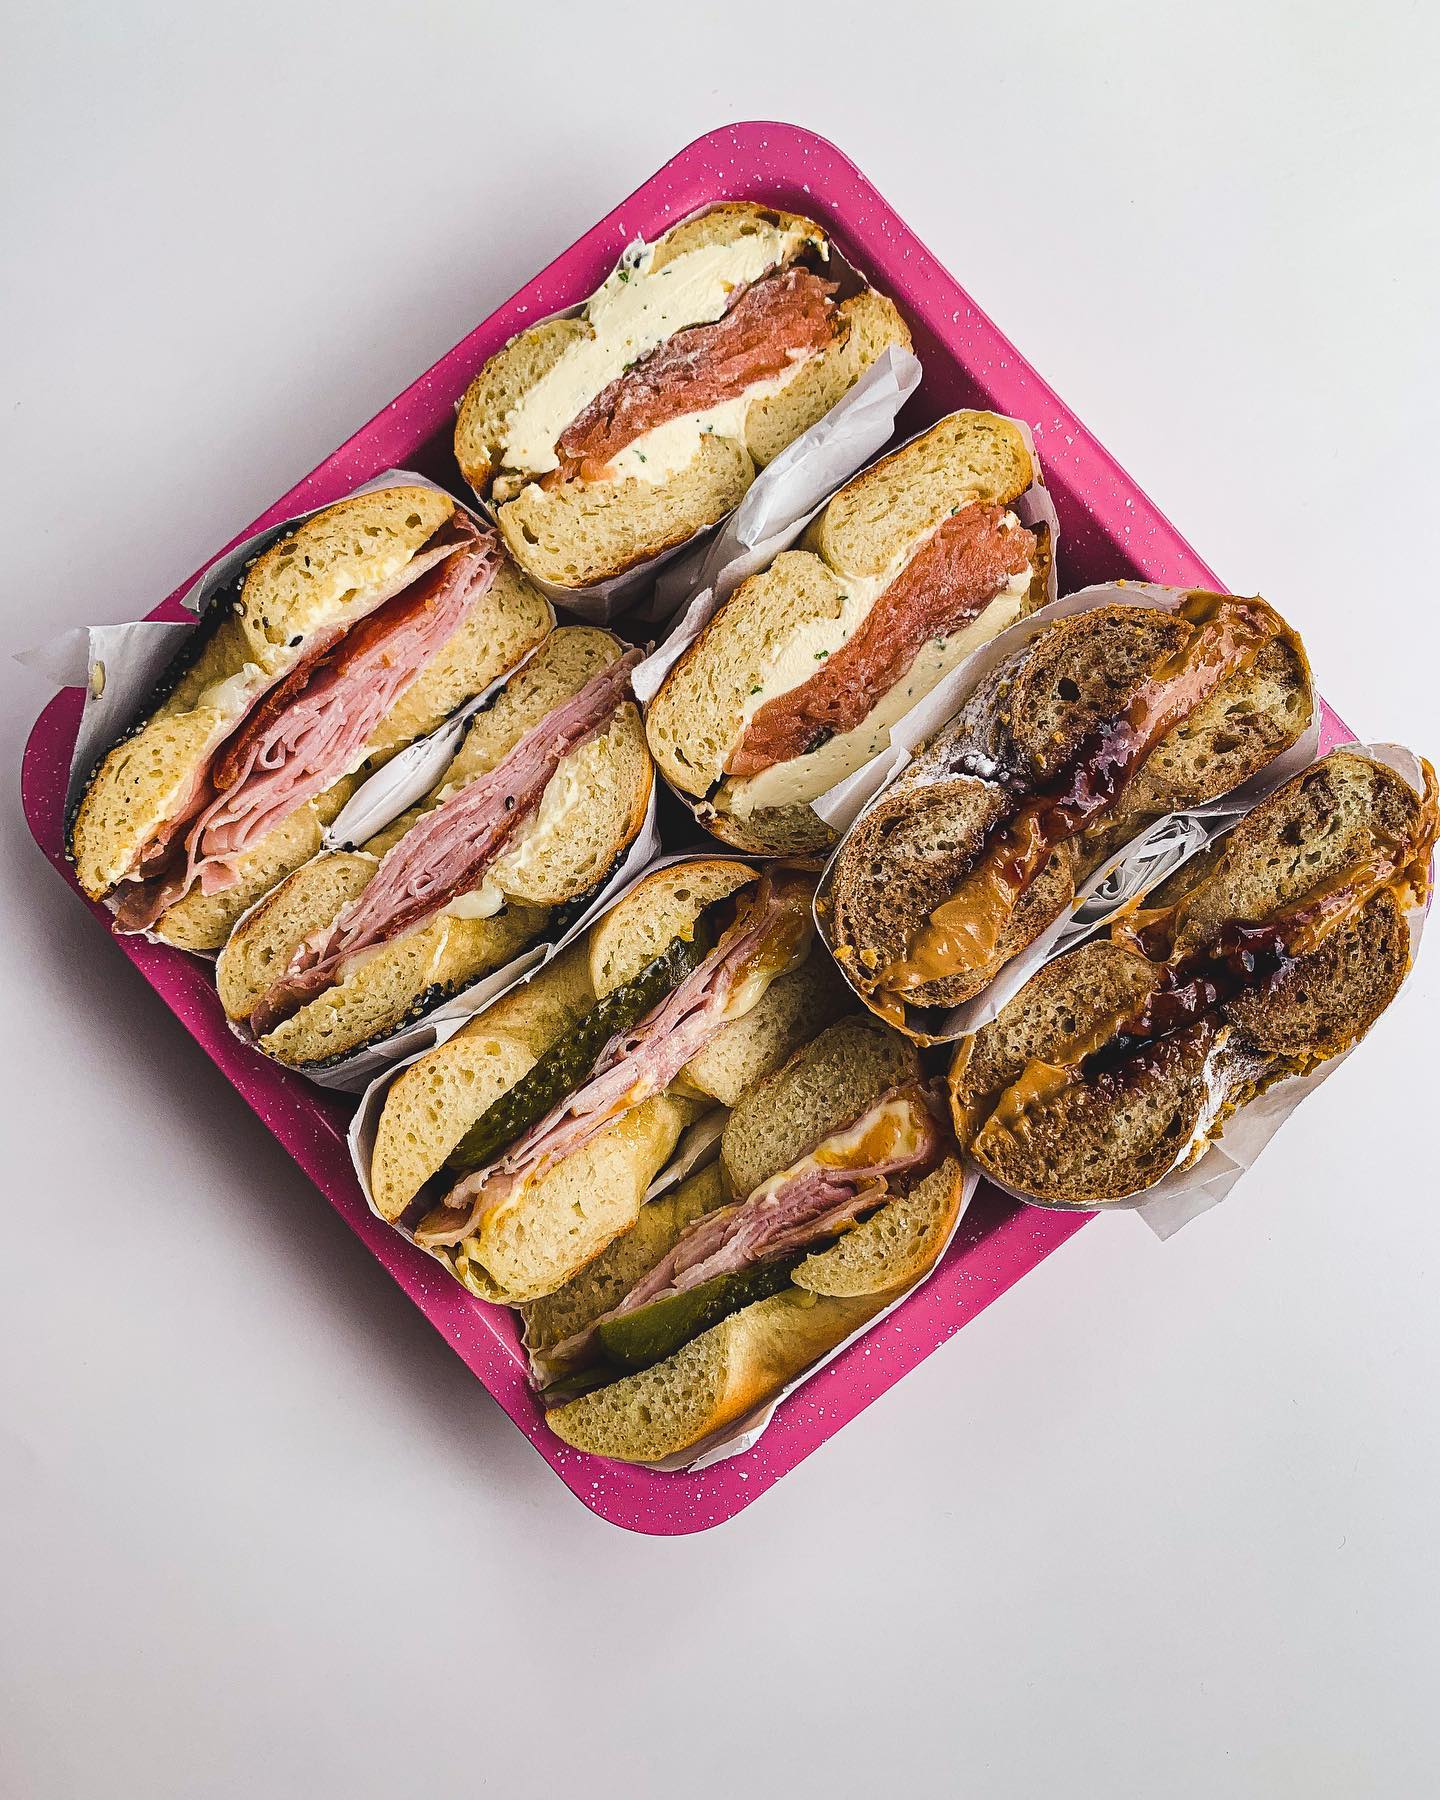 Booyabagels - sandwich bagels